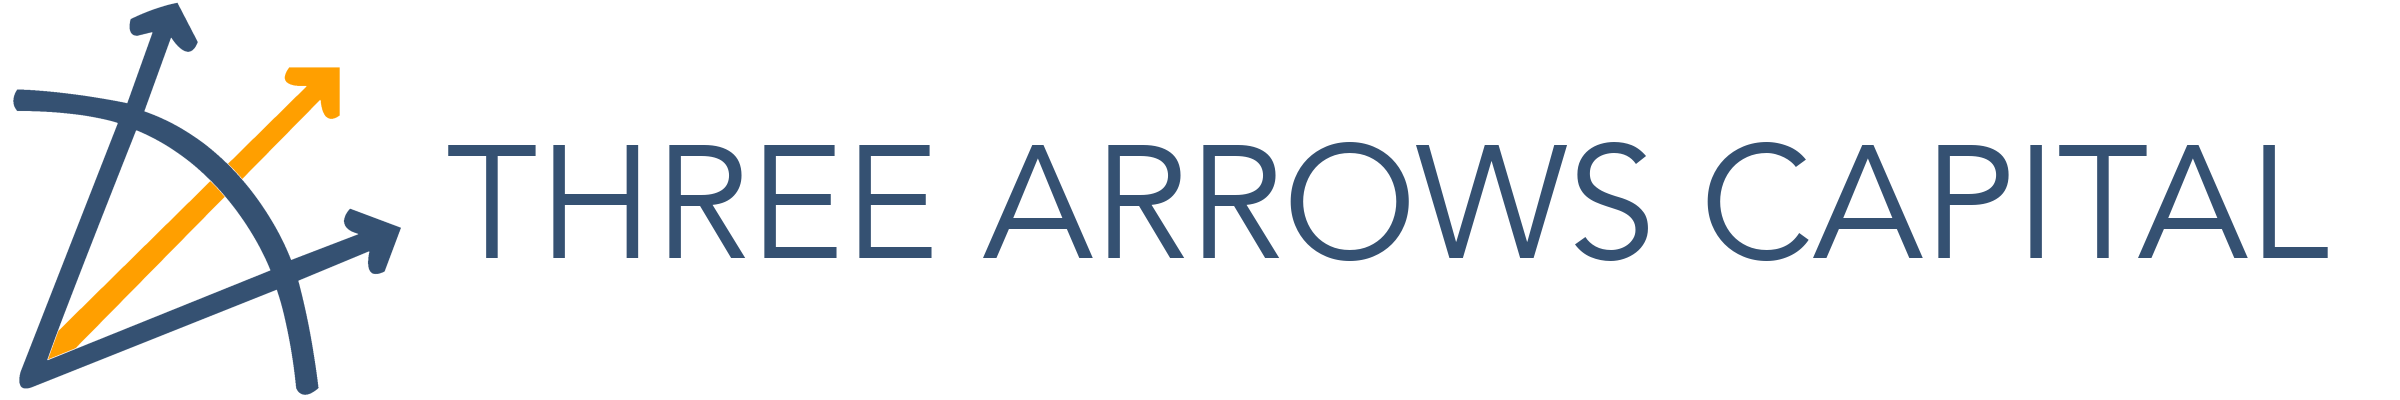 Three Arrows Capital | Lead investor